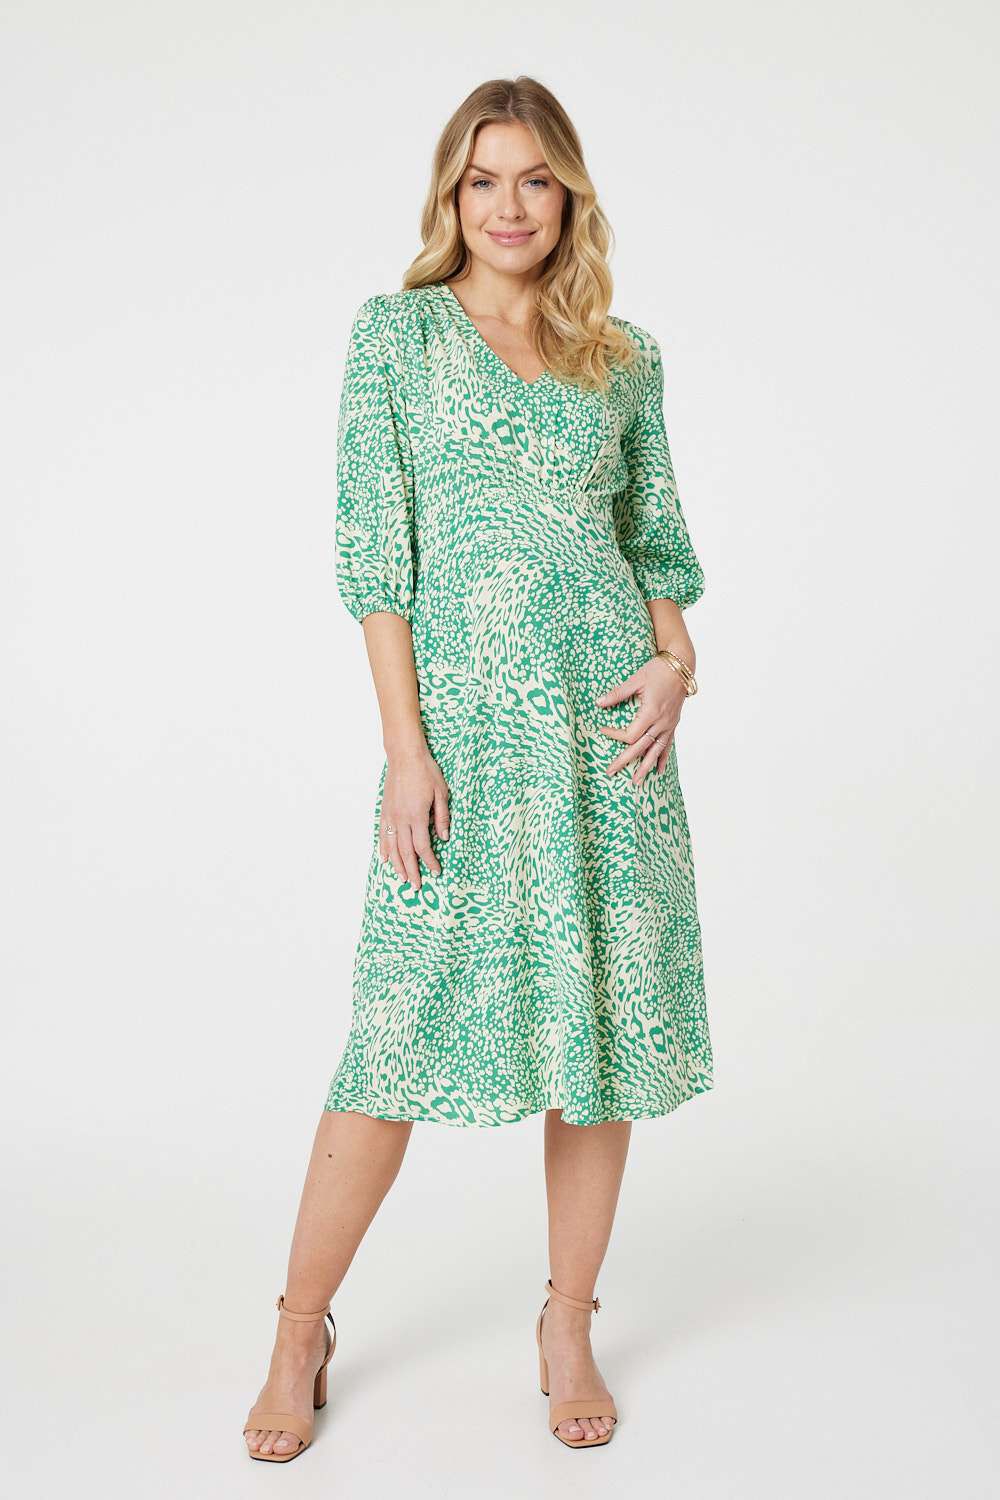 Izabel London Green - Animal Print Slim Fit Midi Dress, Size: 10